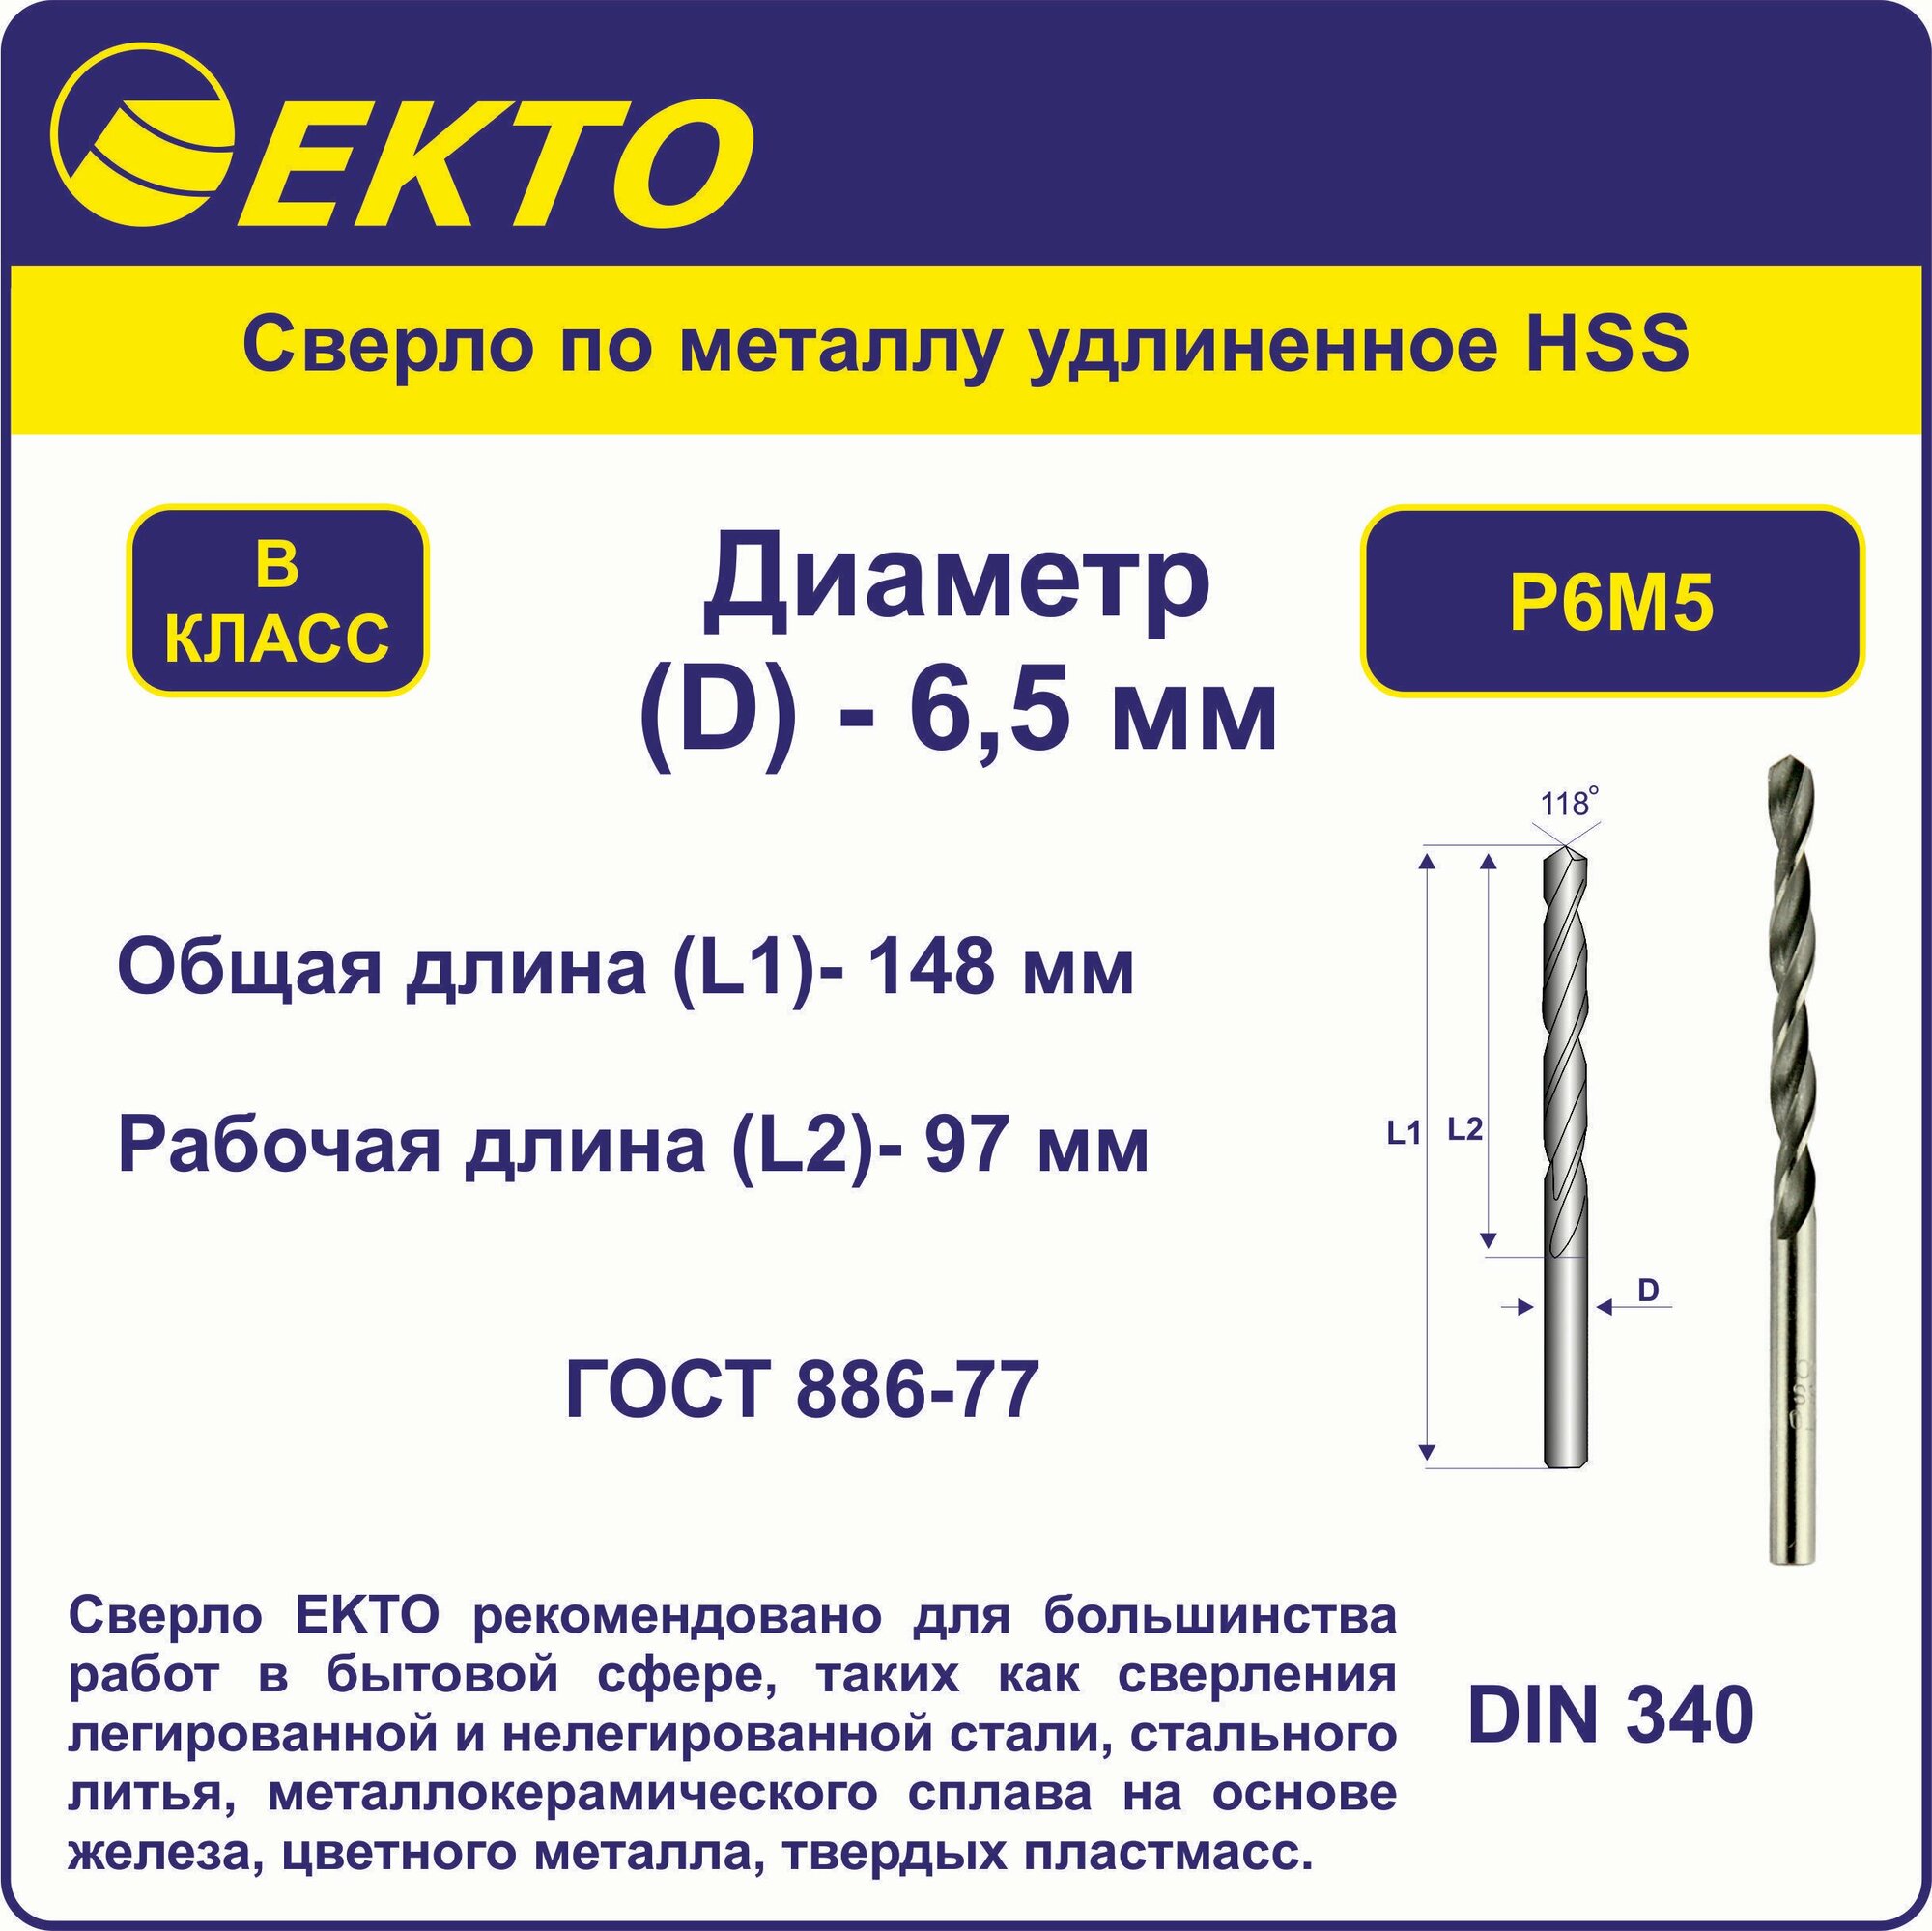 Сверло по металлу удлинённое HSS 6,5 мм цилиндрический хвостовик EKTO